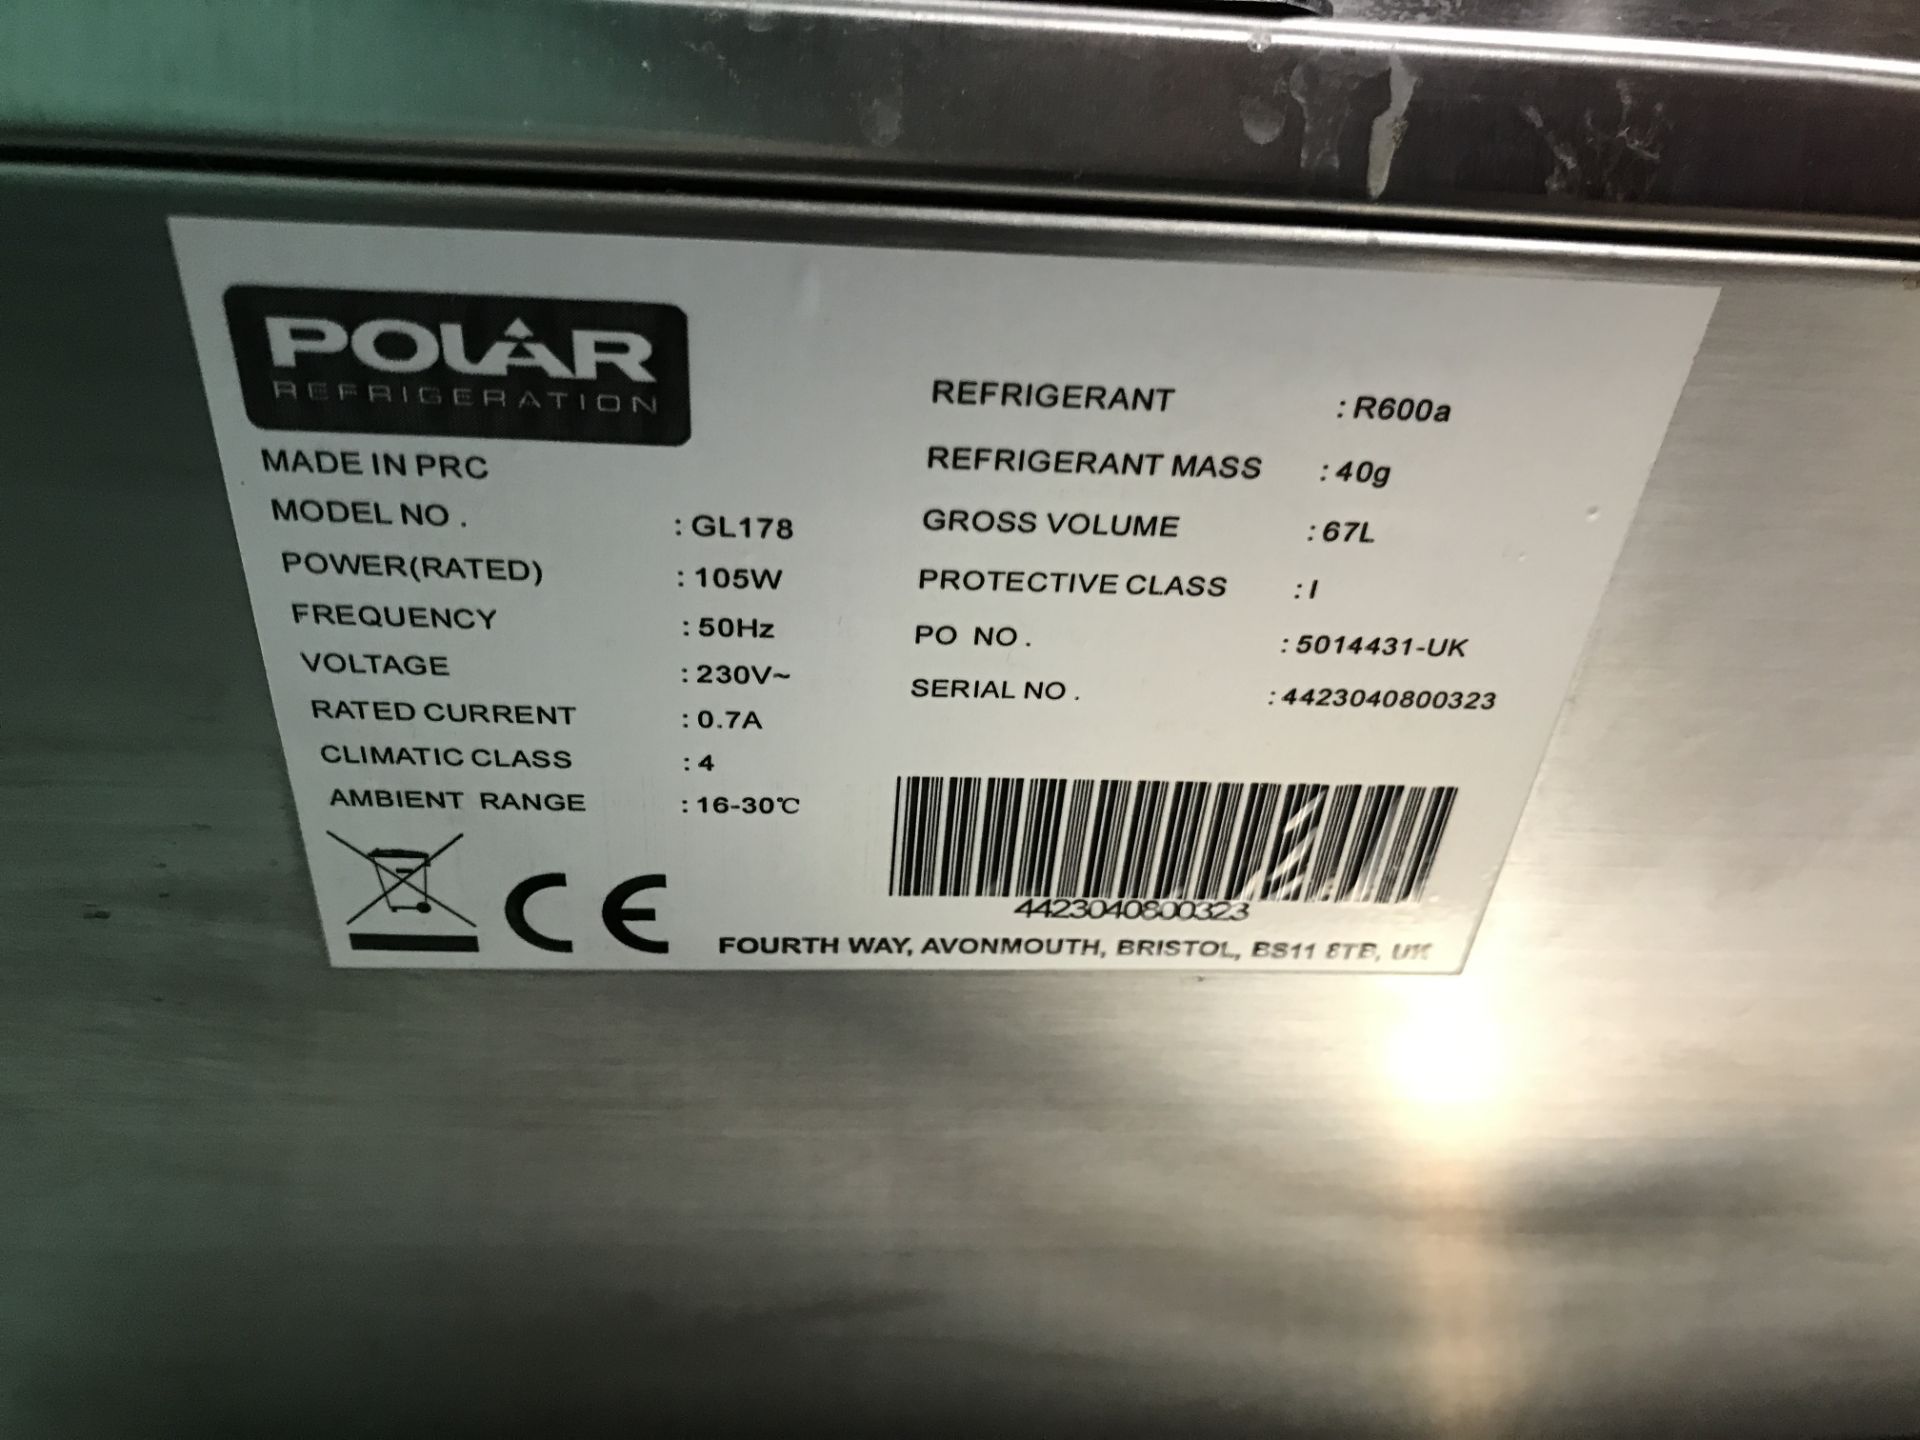 Polar Refrigeration Refrigerated Display Unit w/ Chopping Board - Image 3 of 3